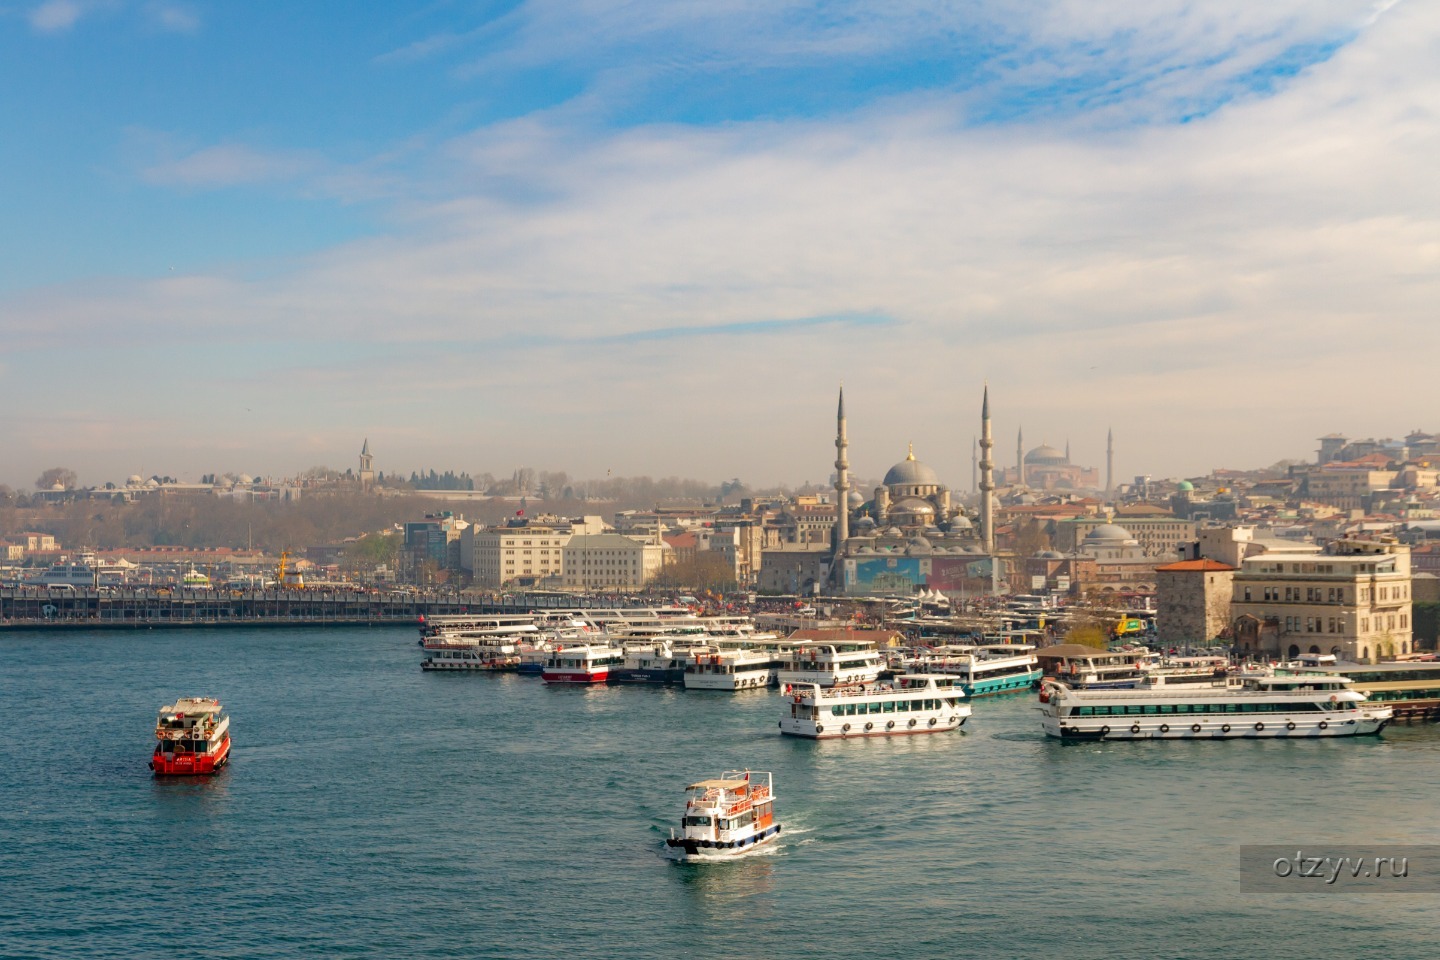 Туры в стамбул в апреле. Стамбул в апреле. Стамбул 2019. Стамбул в апреле фото. Фото стамбуь апрель.